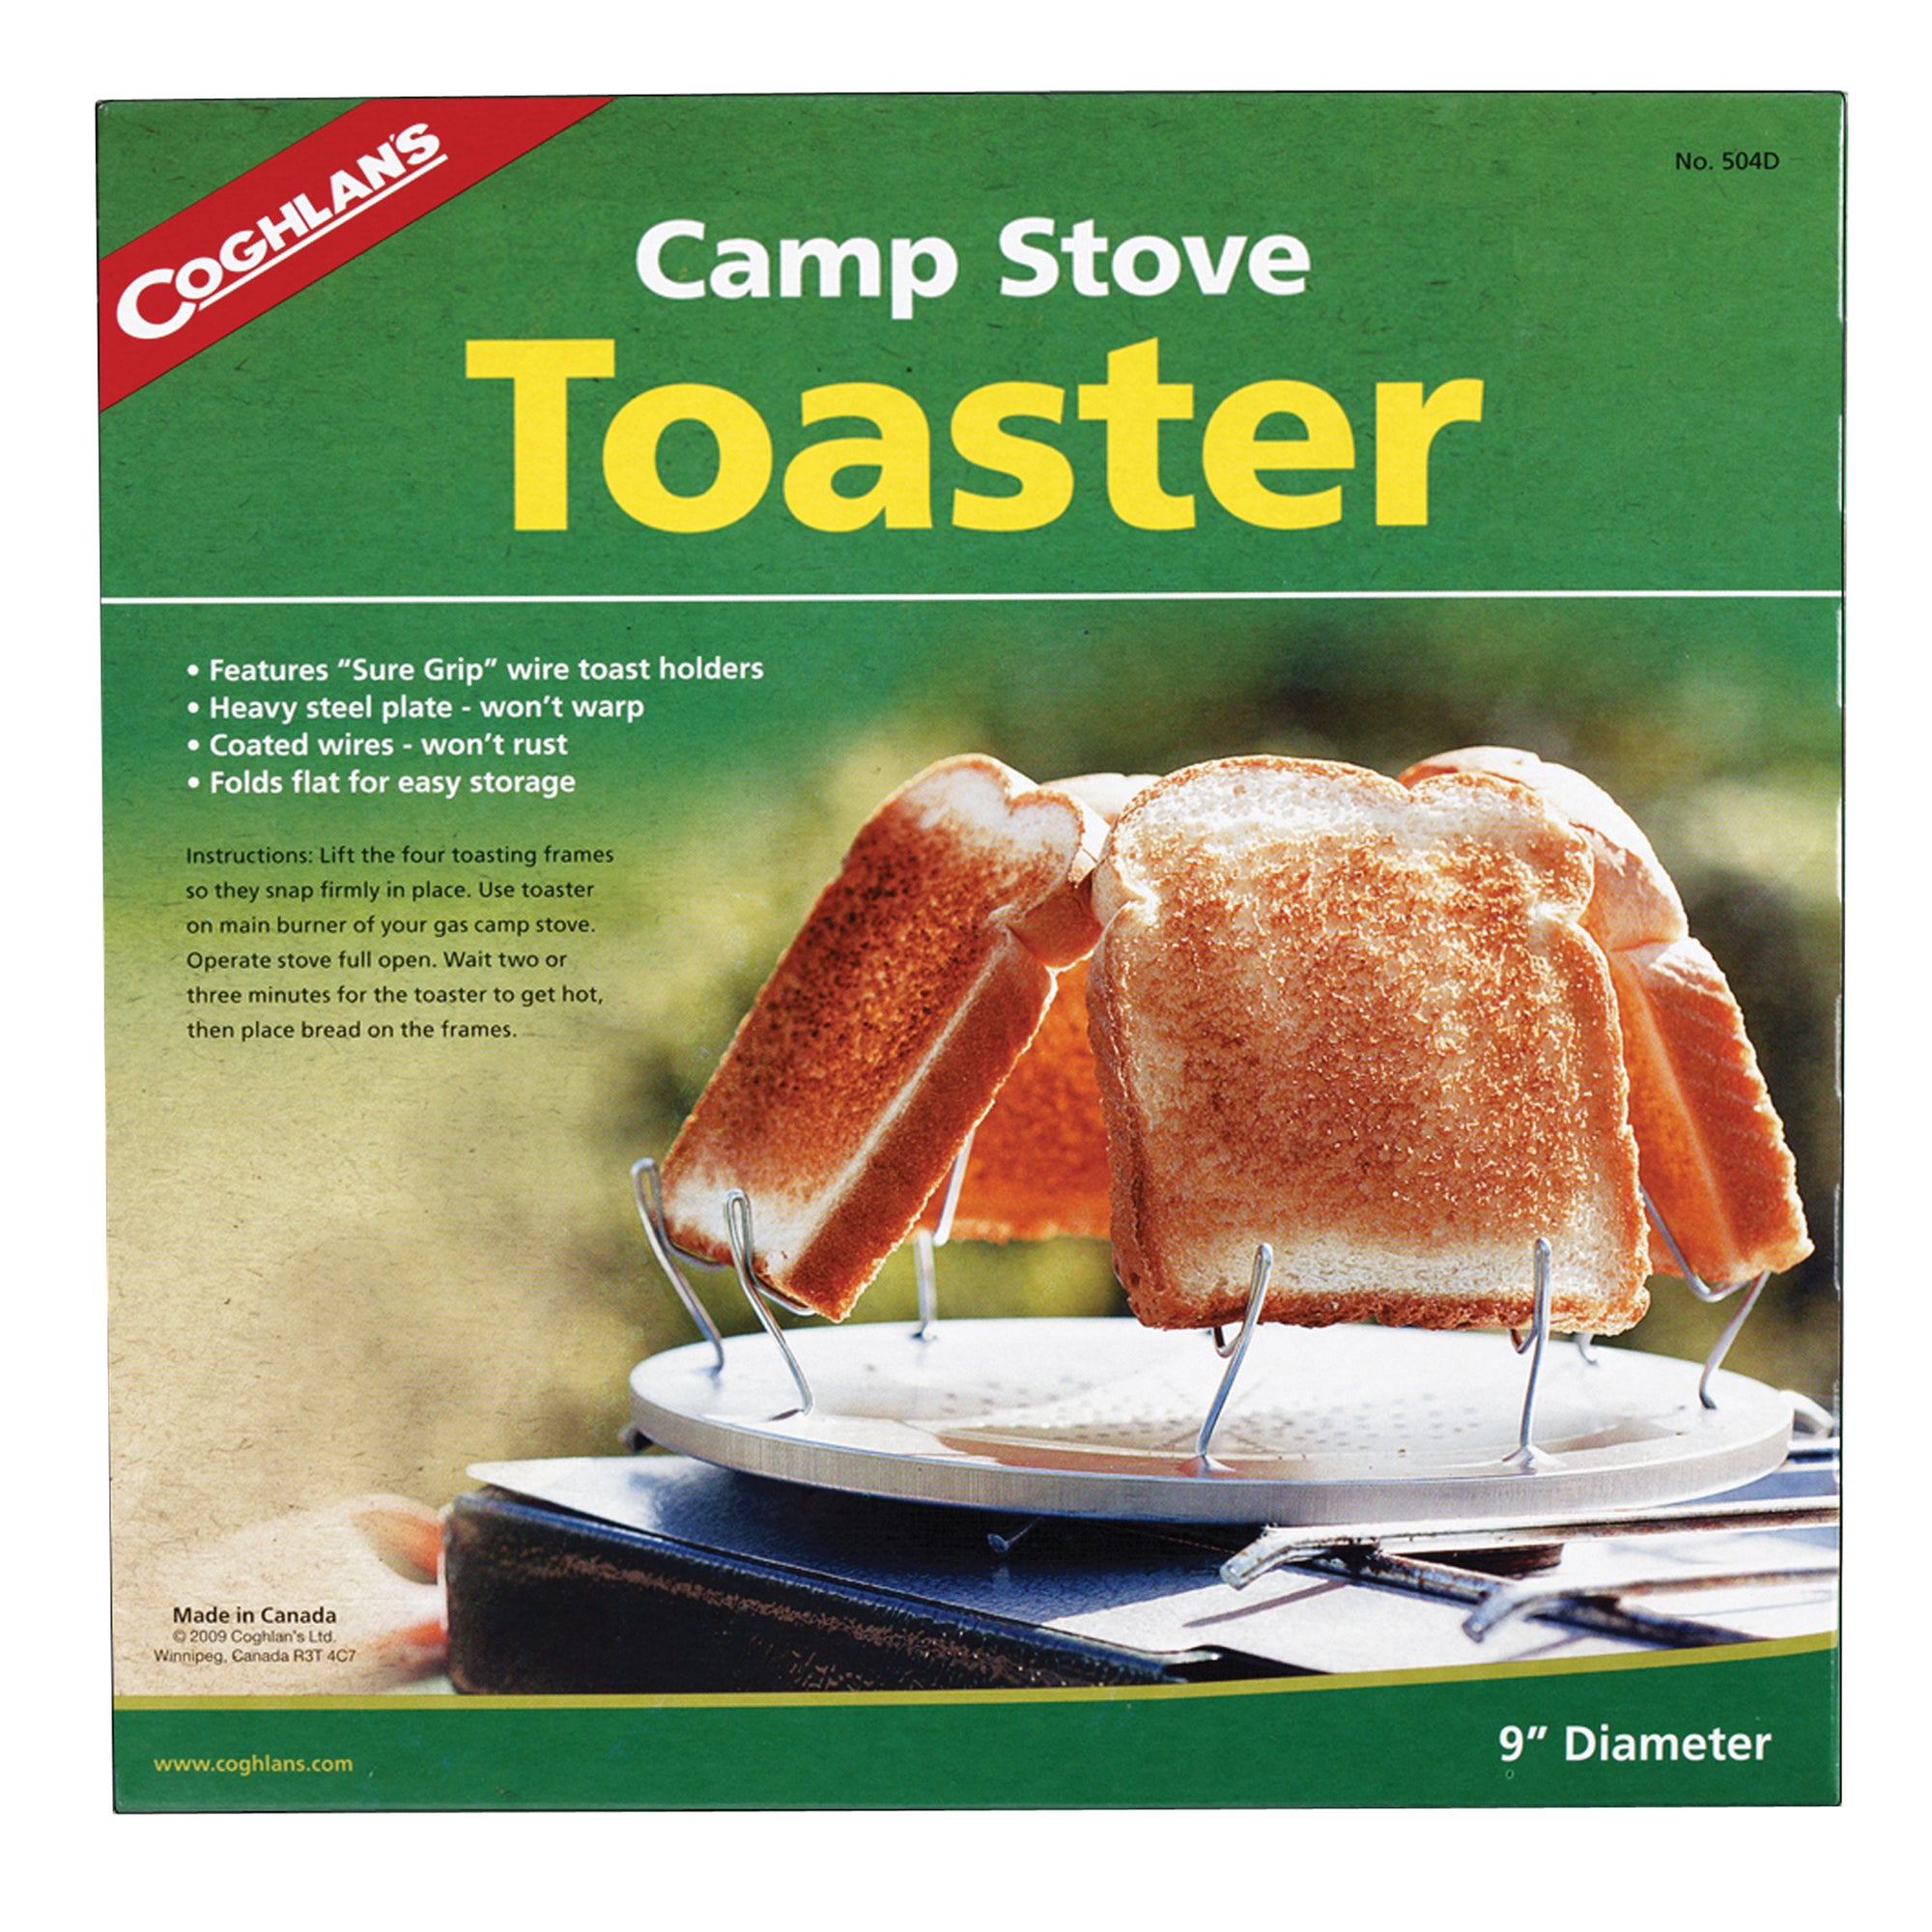 Coghlan's 504D Camp Stove Toaster